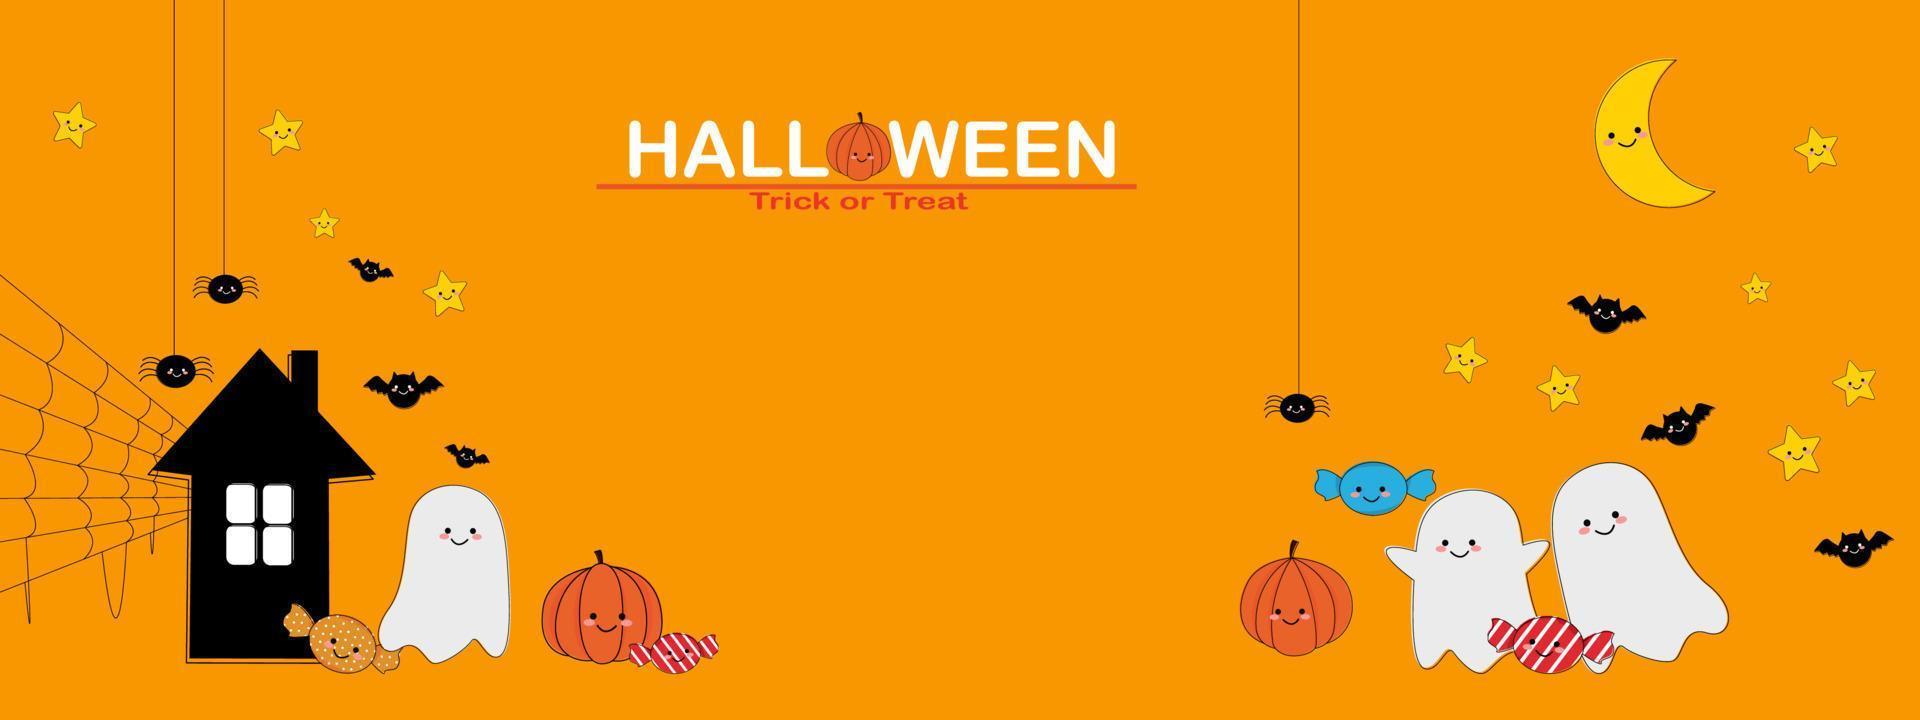 Lycklig halloween baner eller fest inbjudan bakgrund. halloween på orange bakgrund. söt spöke pumpa godis Spindel vektor